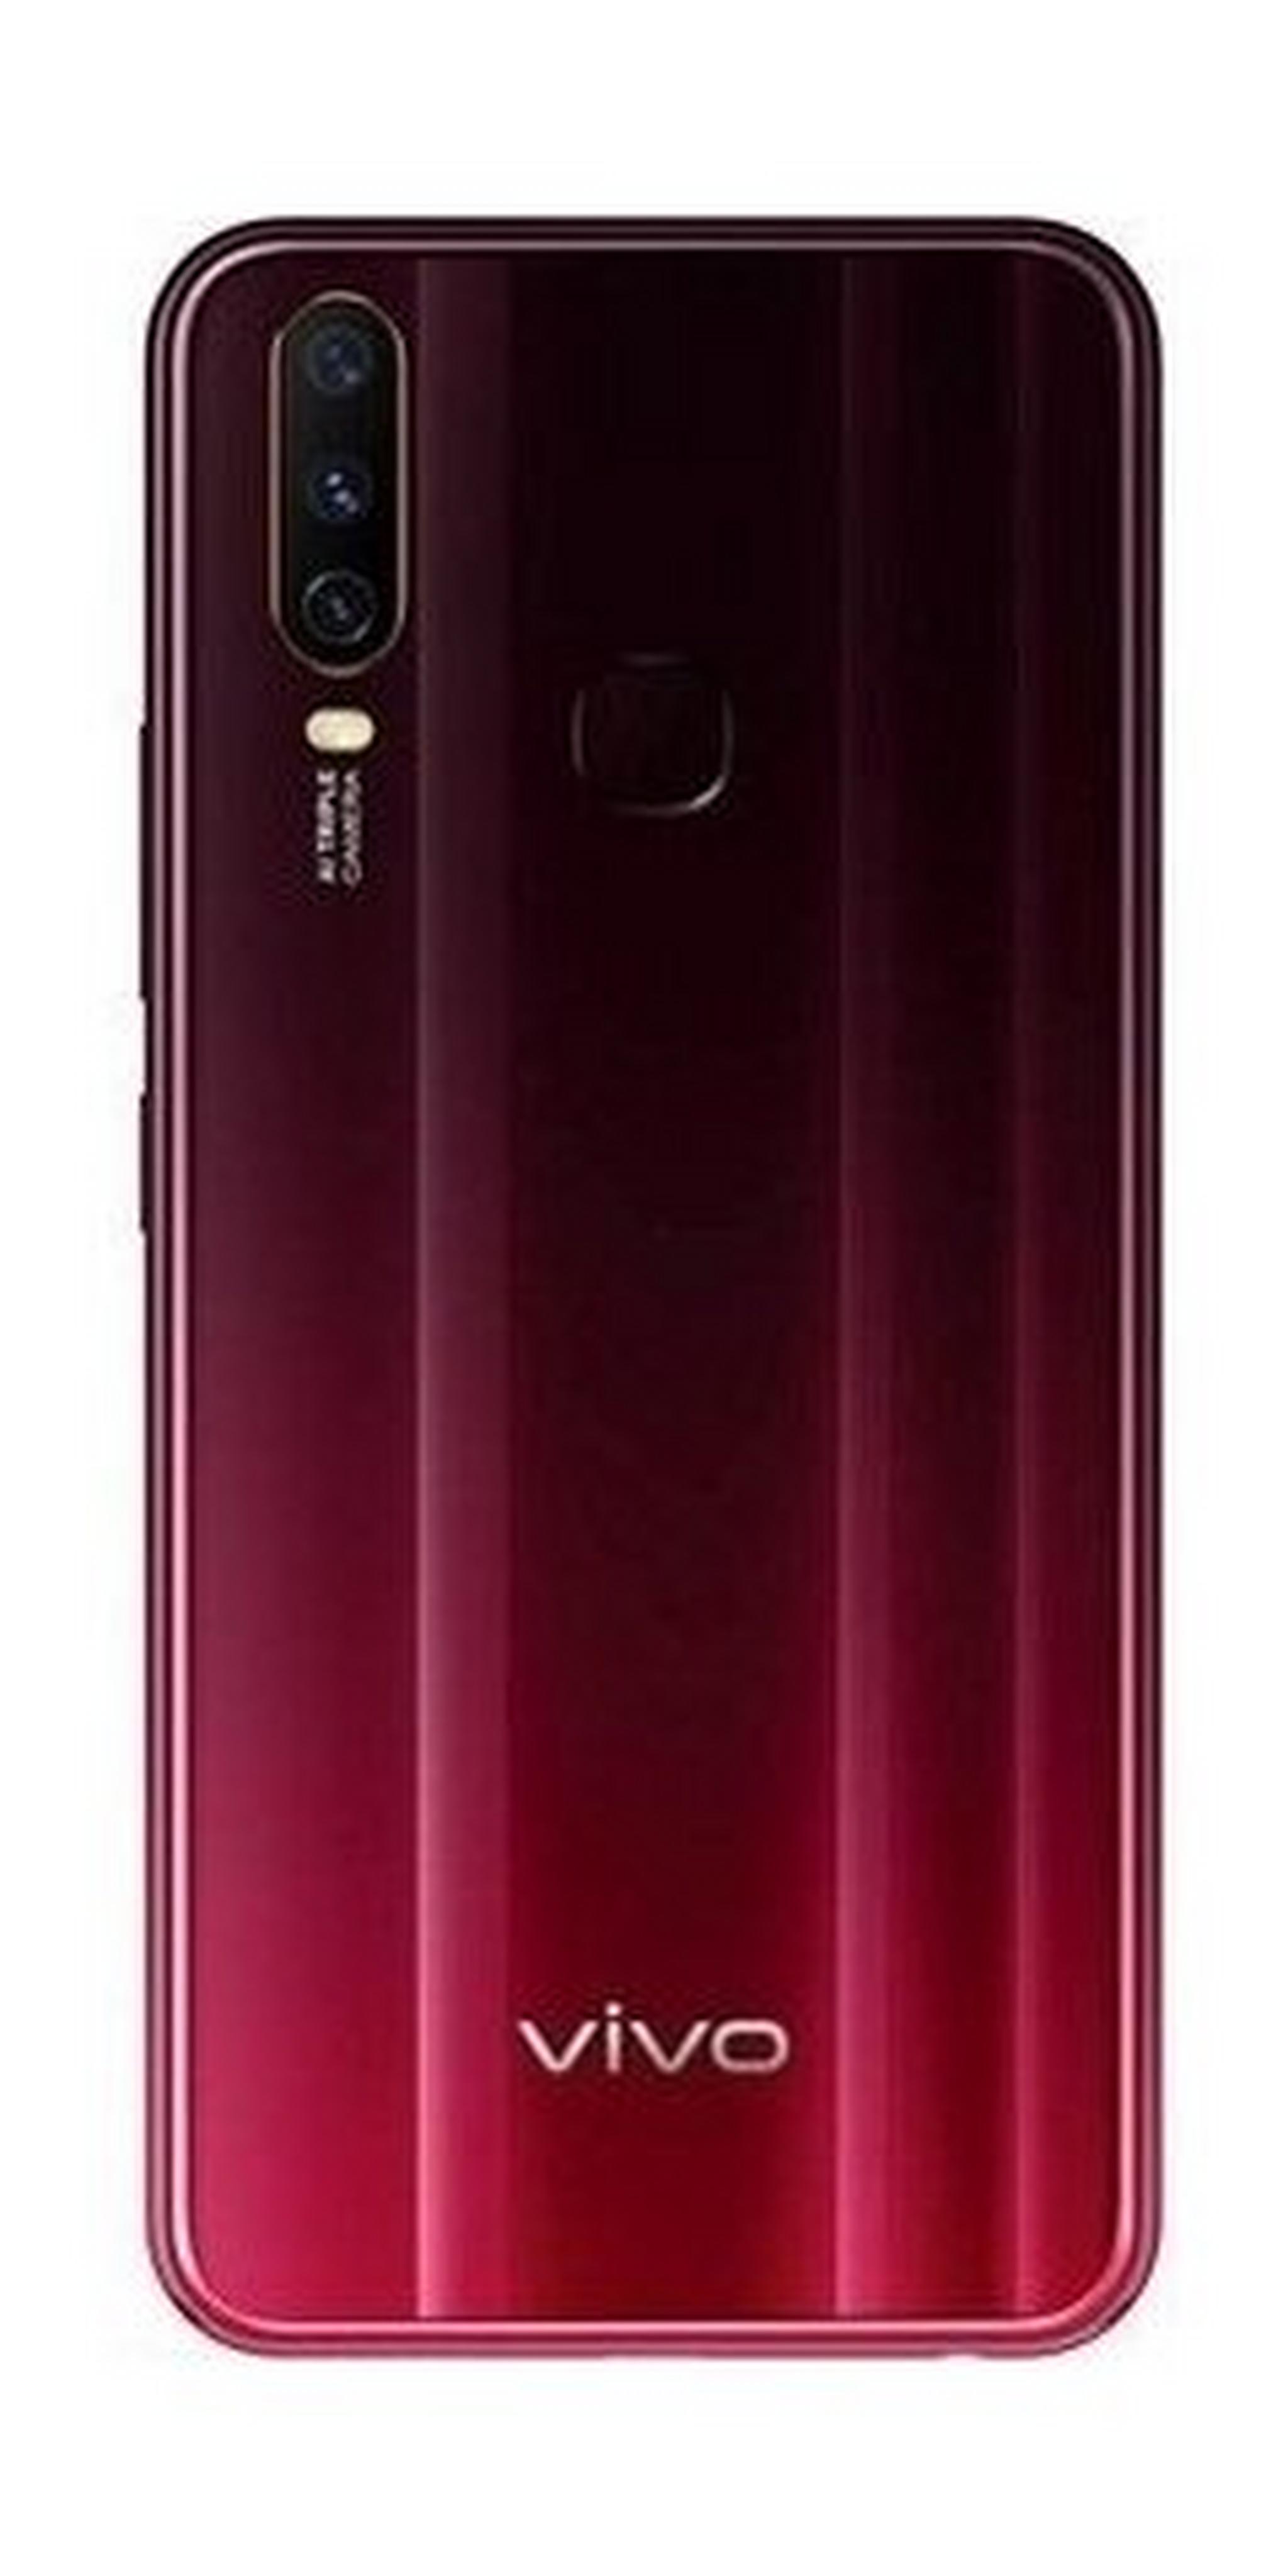 Vivo Y12 64GB Phone - Burgandy Red